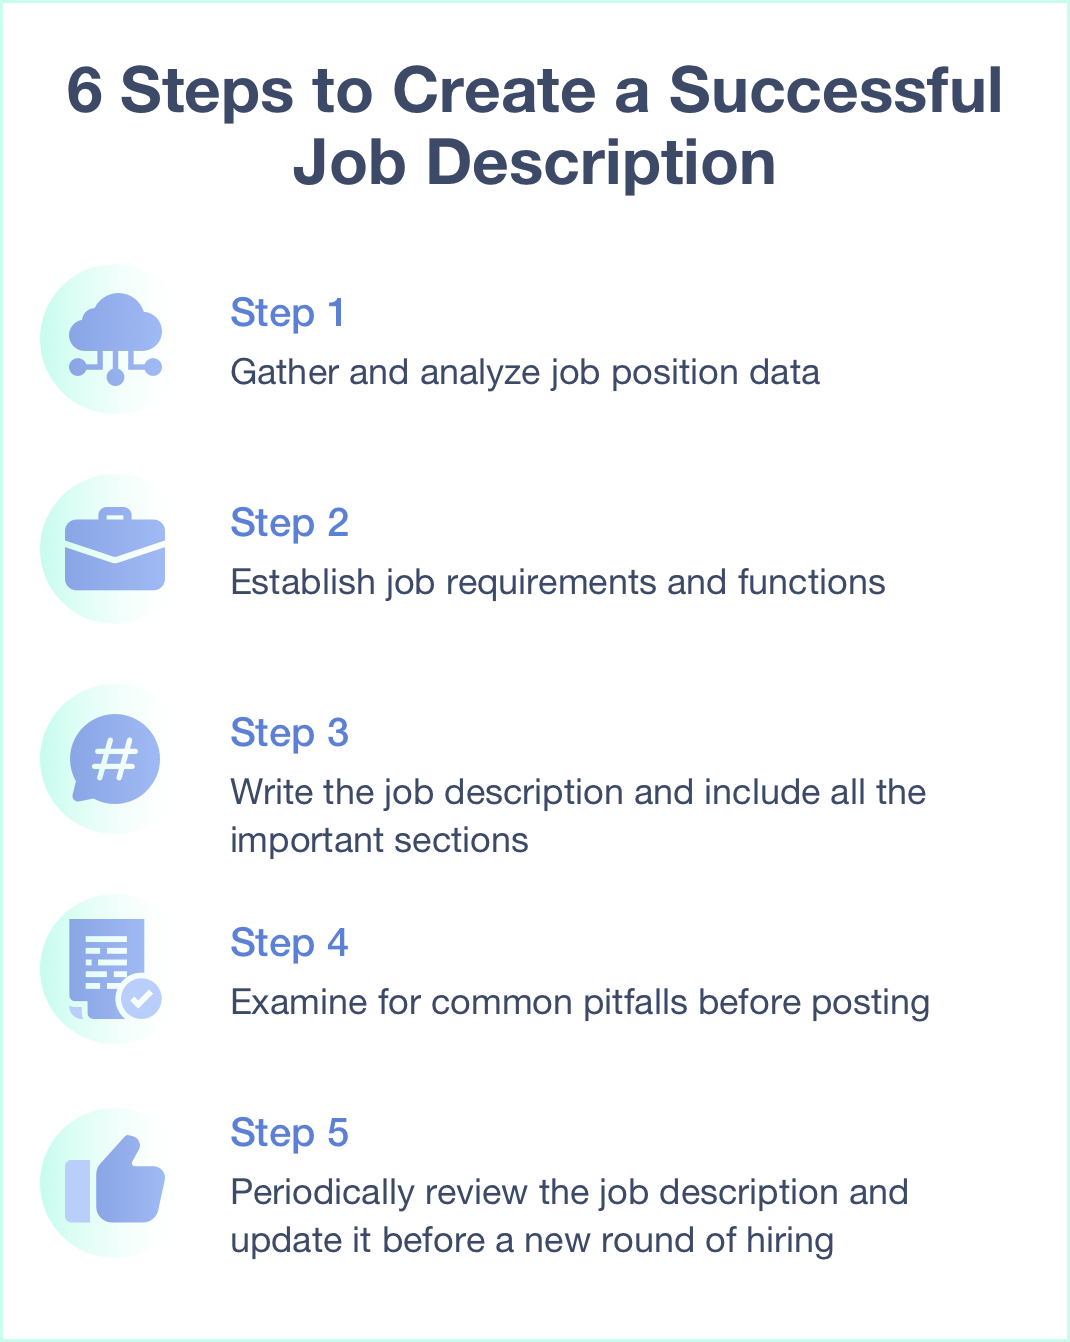 6 steps to create a successful job description